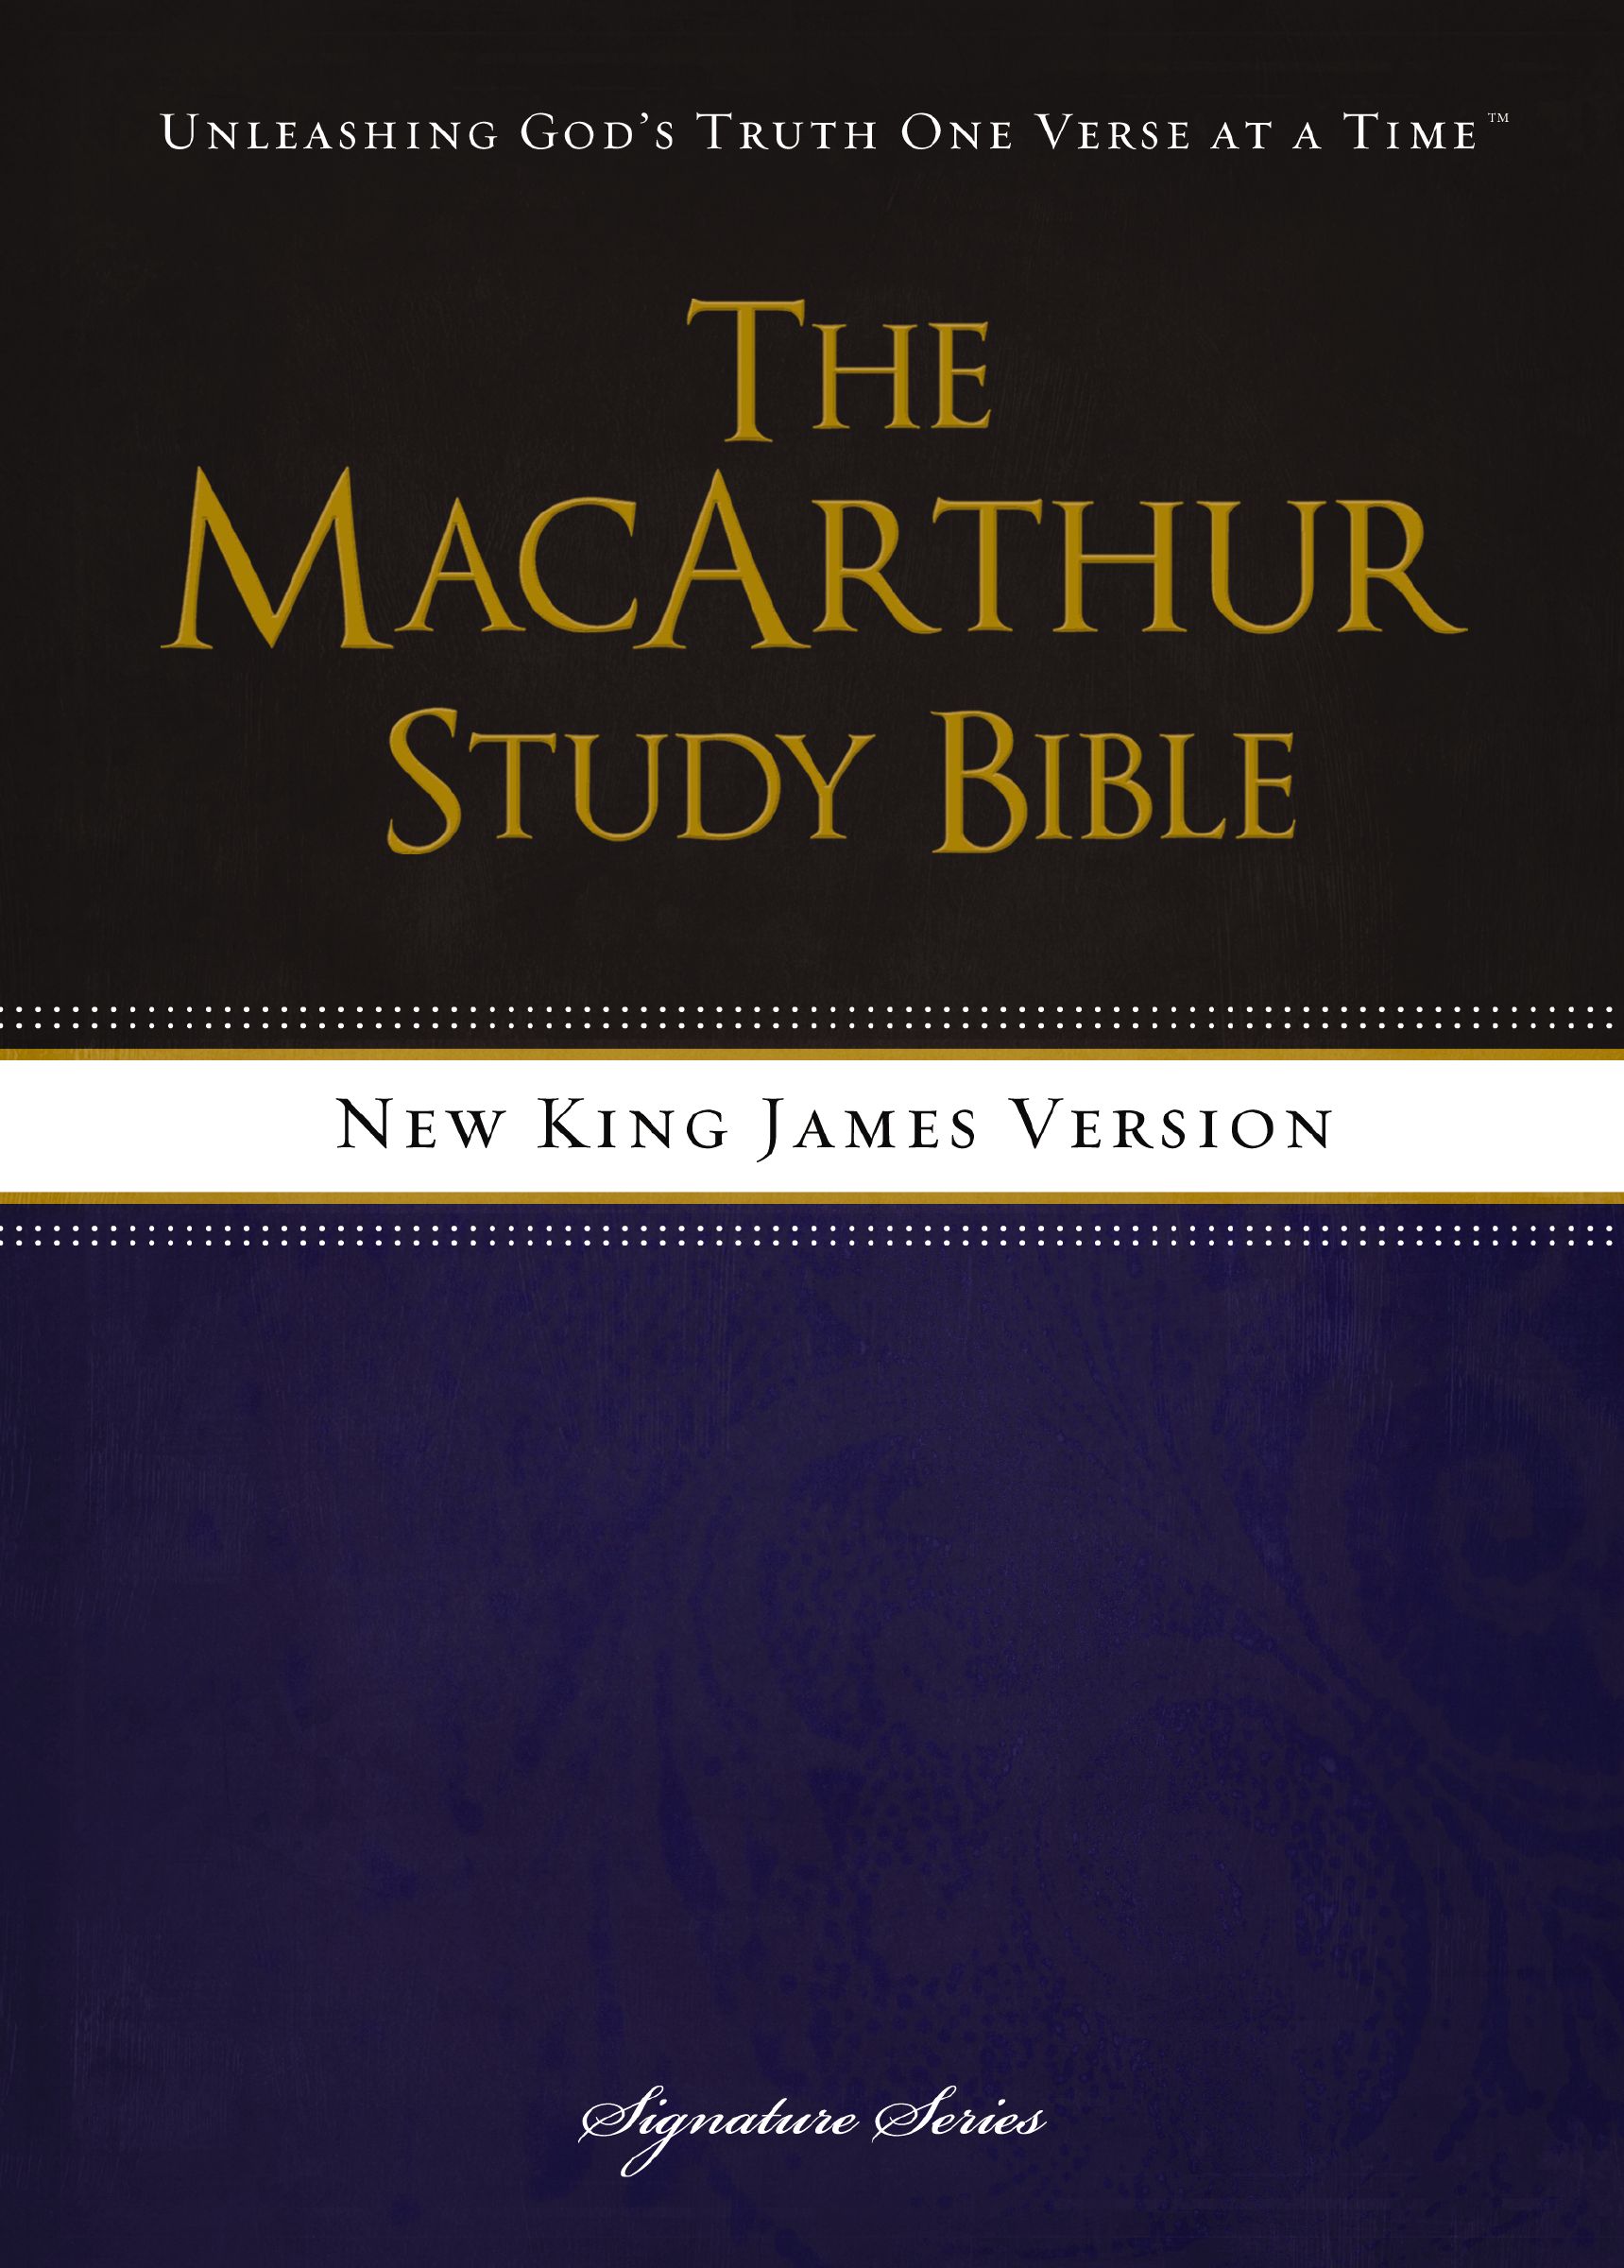 NKJV, The MacArthur Study Bible, eBook - 10-14.99